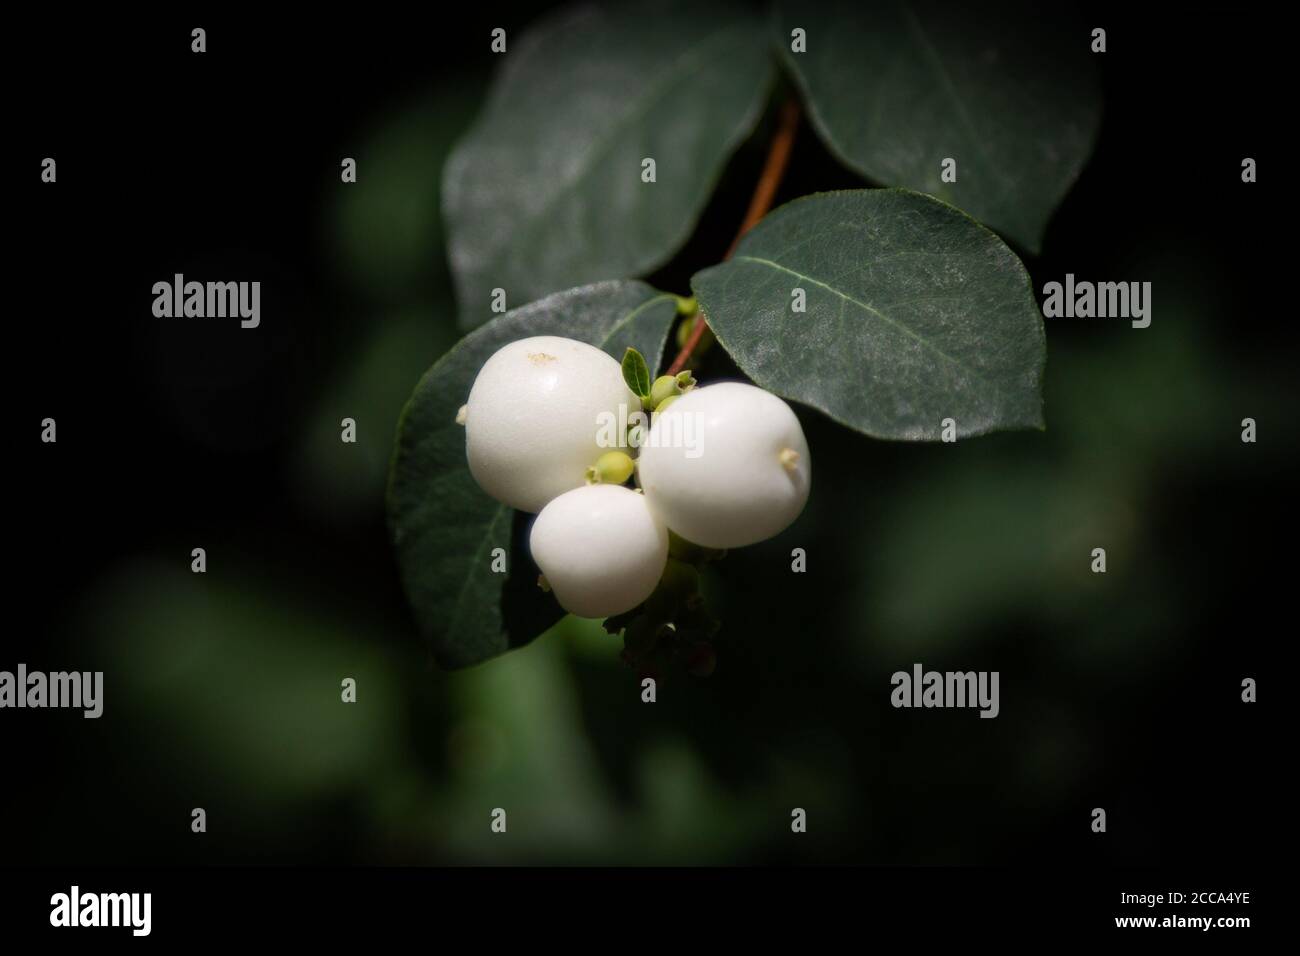 Snowberry or snowberries on a green bush also known as Symphoricarpos albus Stock Photo